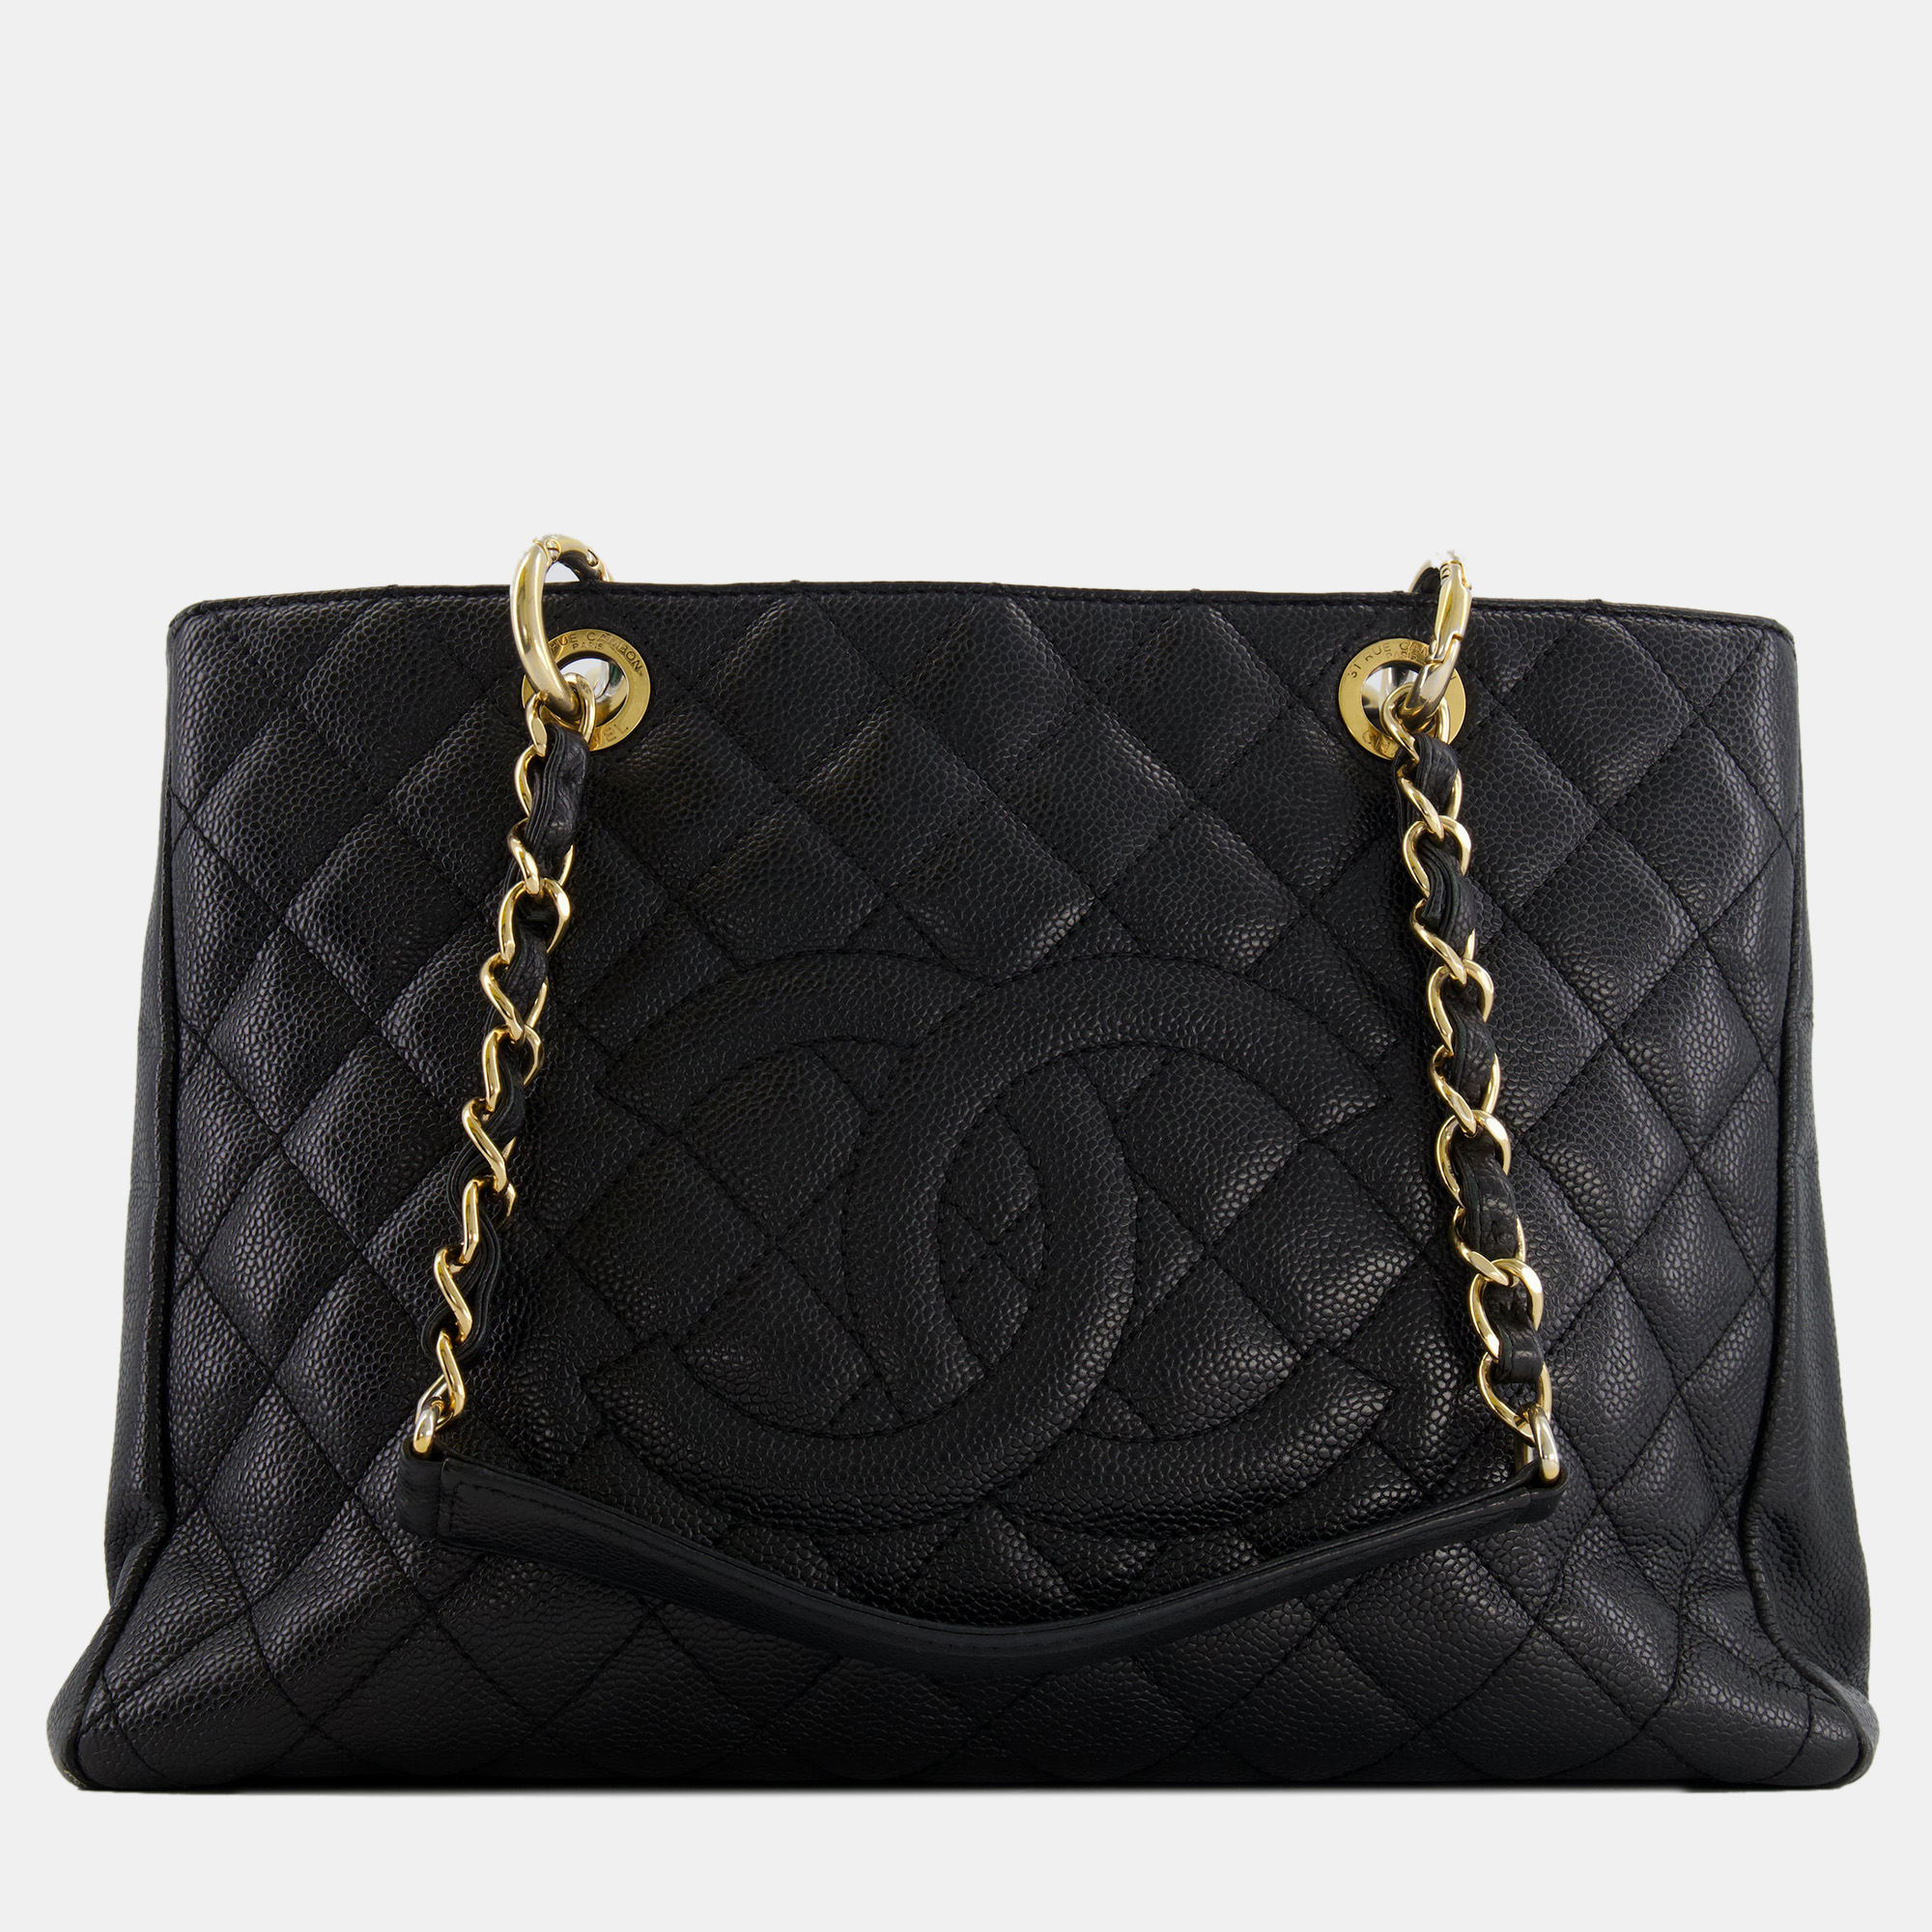 

Chanel Black Caviar GST Grand Shopper Tote Bag with Gold Hardware